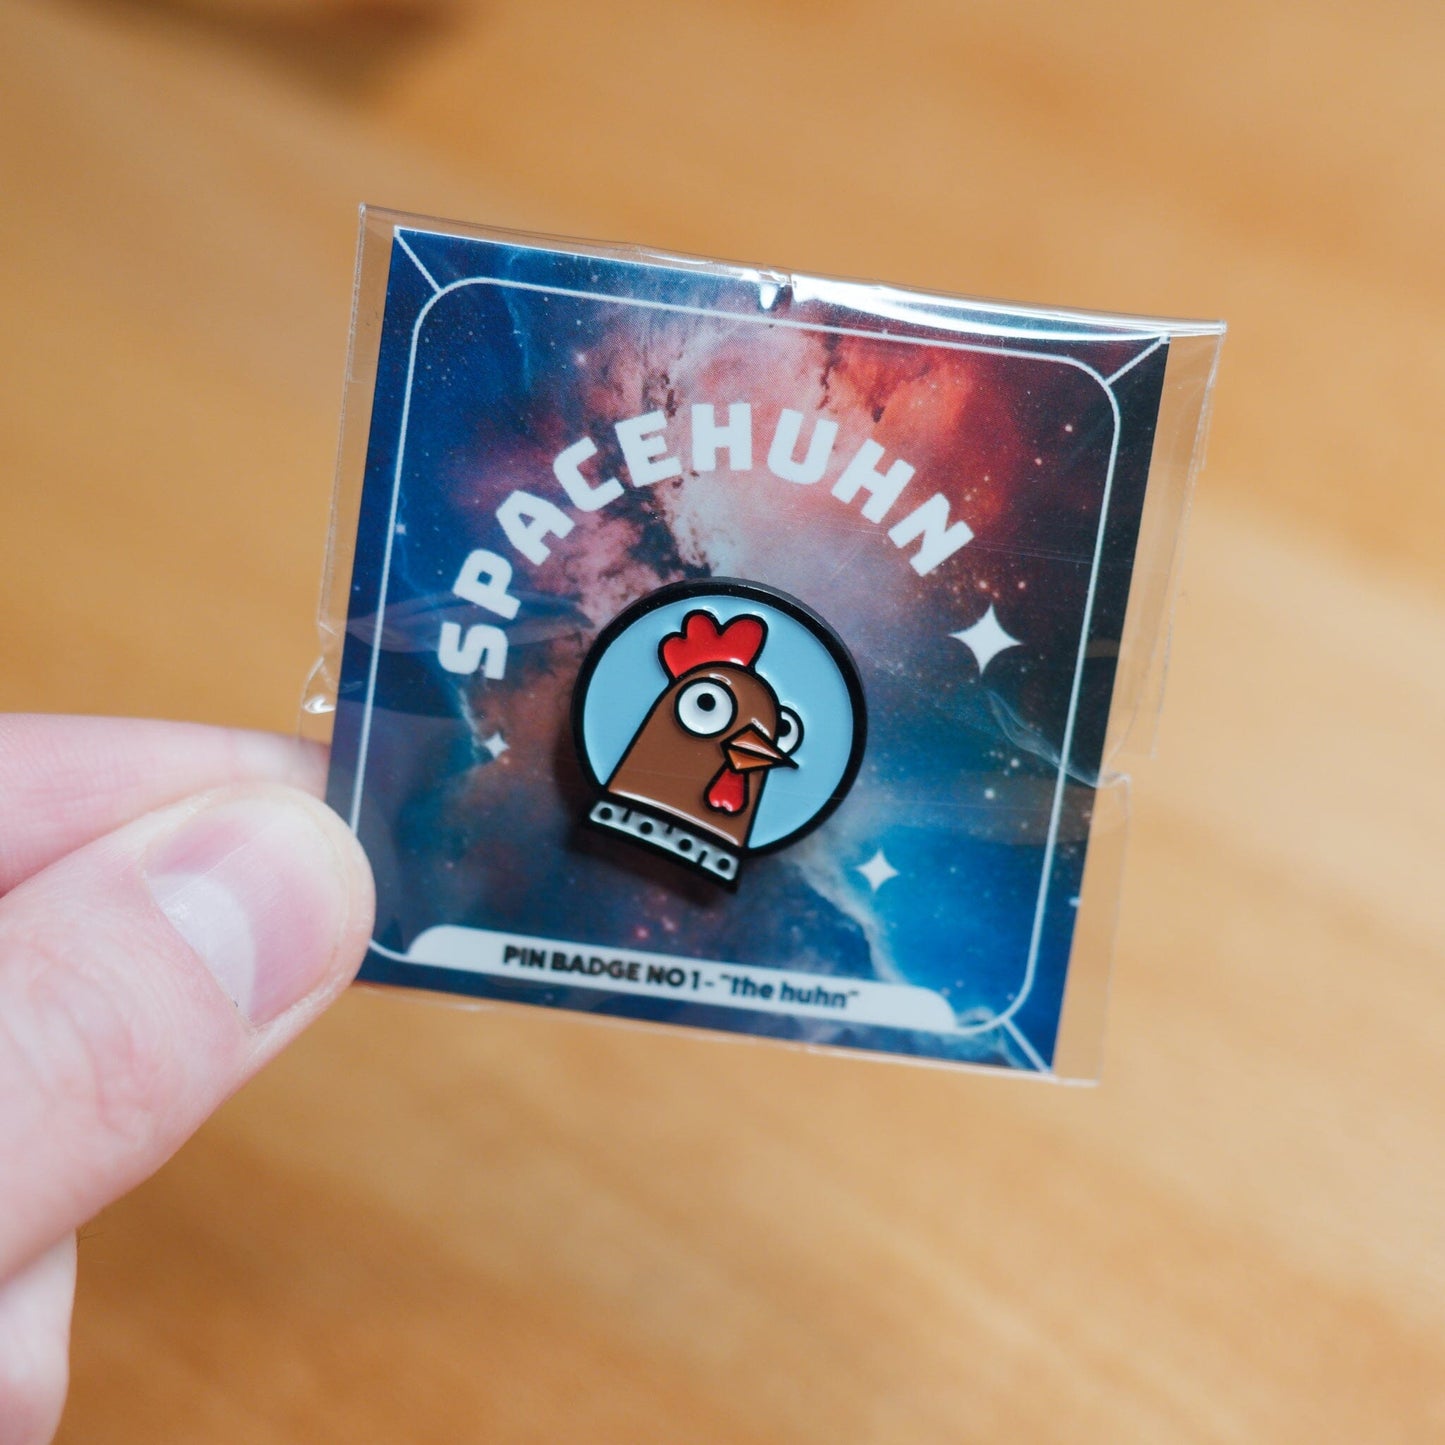 Spacehuhn Enamel Pin with packaging